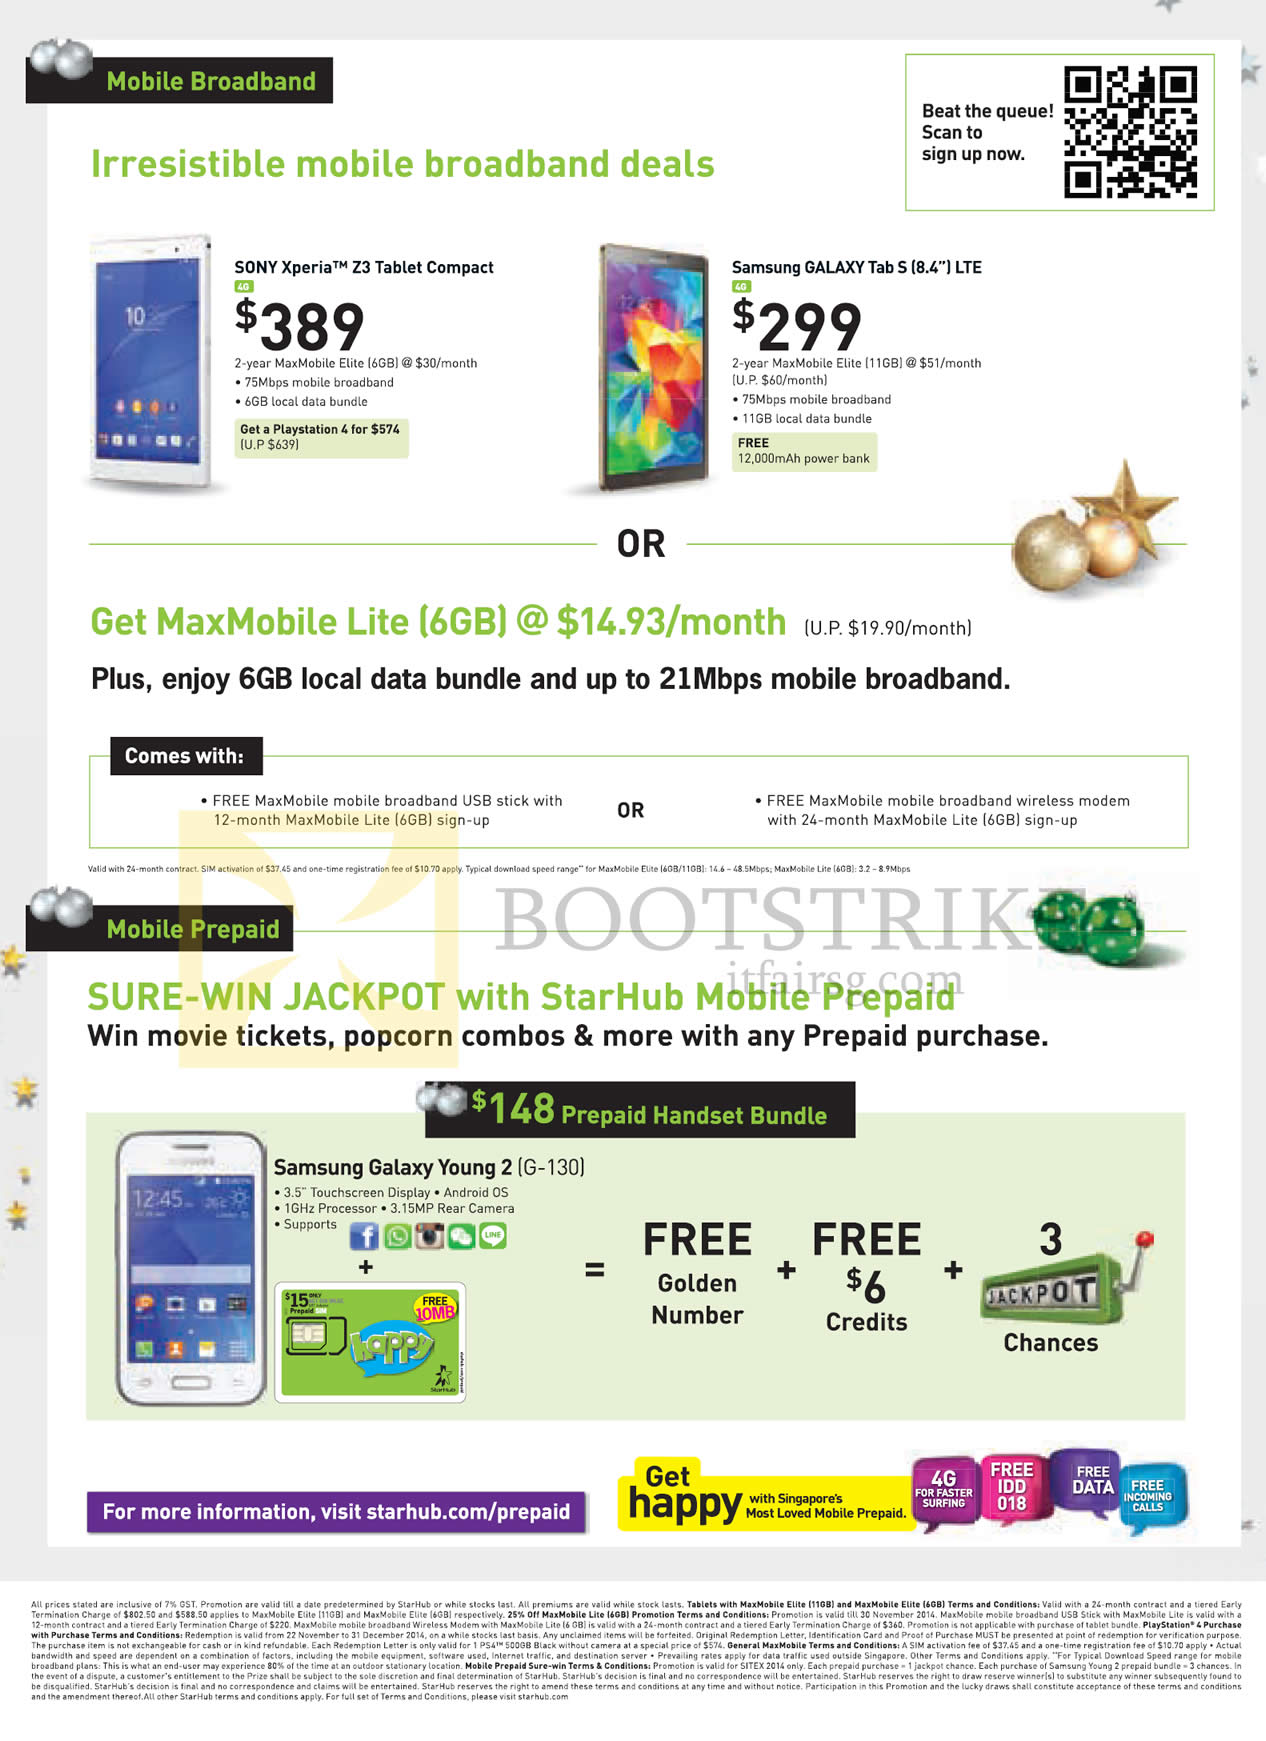 SITEX 2014 price list image brochure of Starhub Mobile Broadband, Prepaid, Sony Xperia Z3, Galaxy Tab S 8.4, Lite, Galaxy Young 2